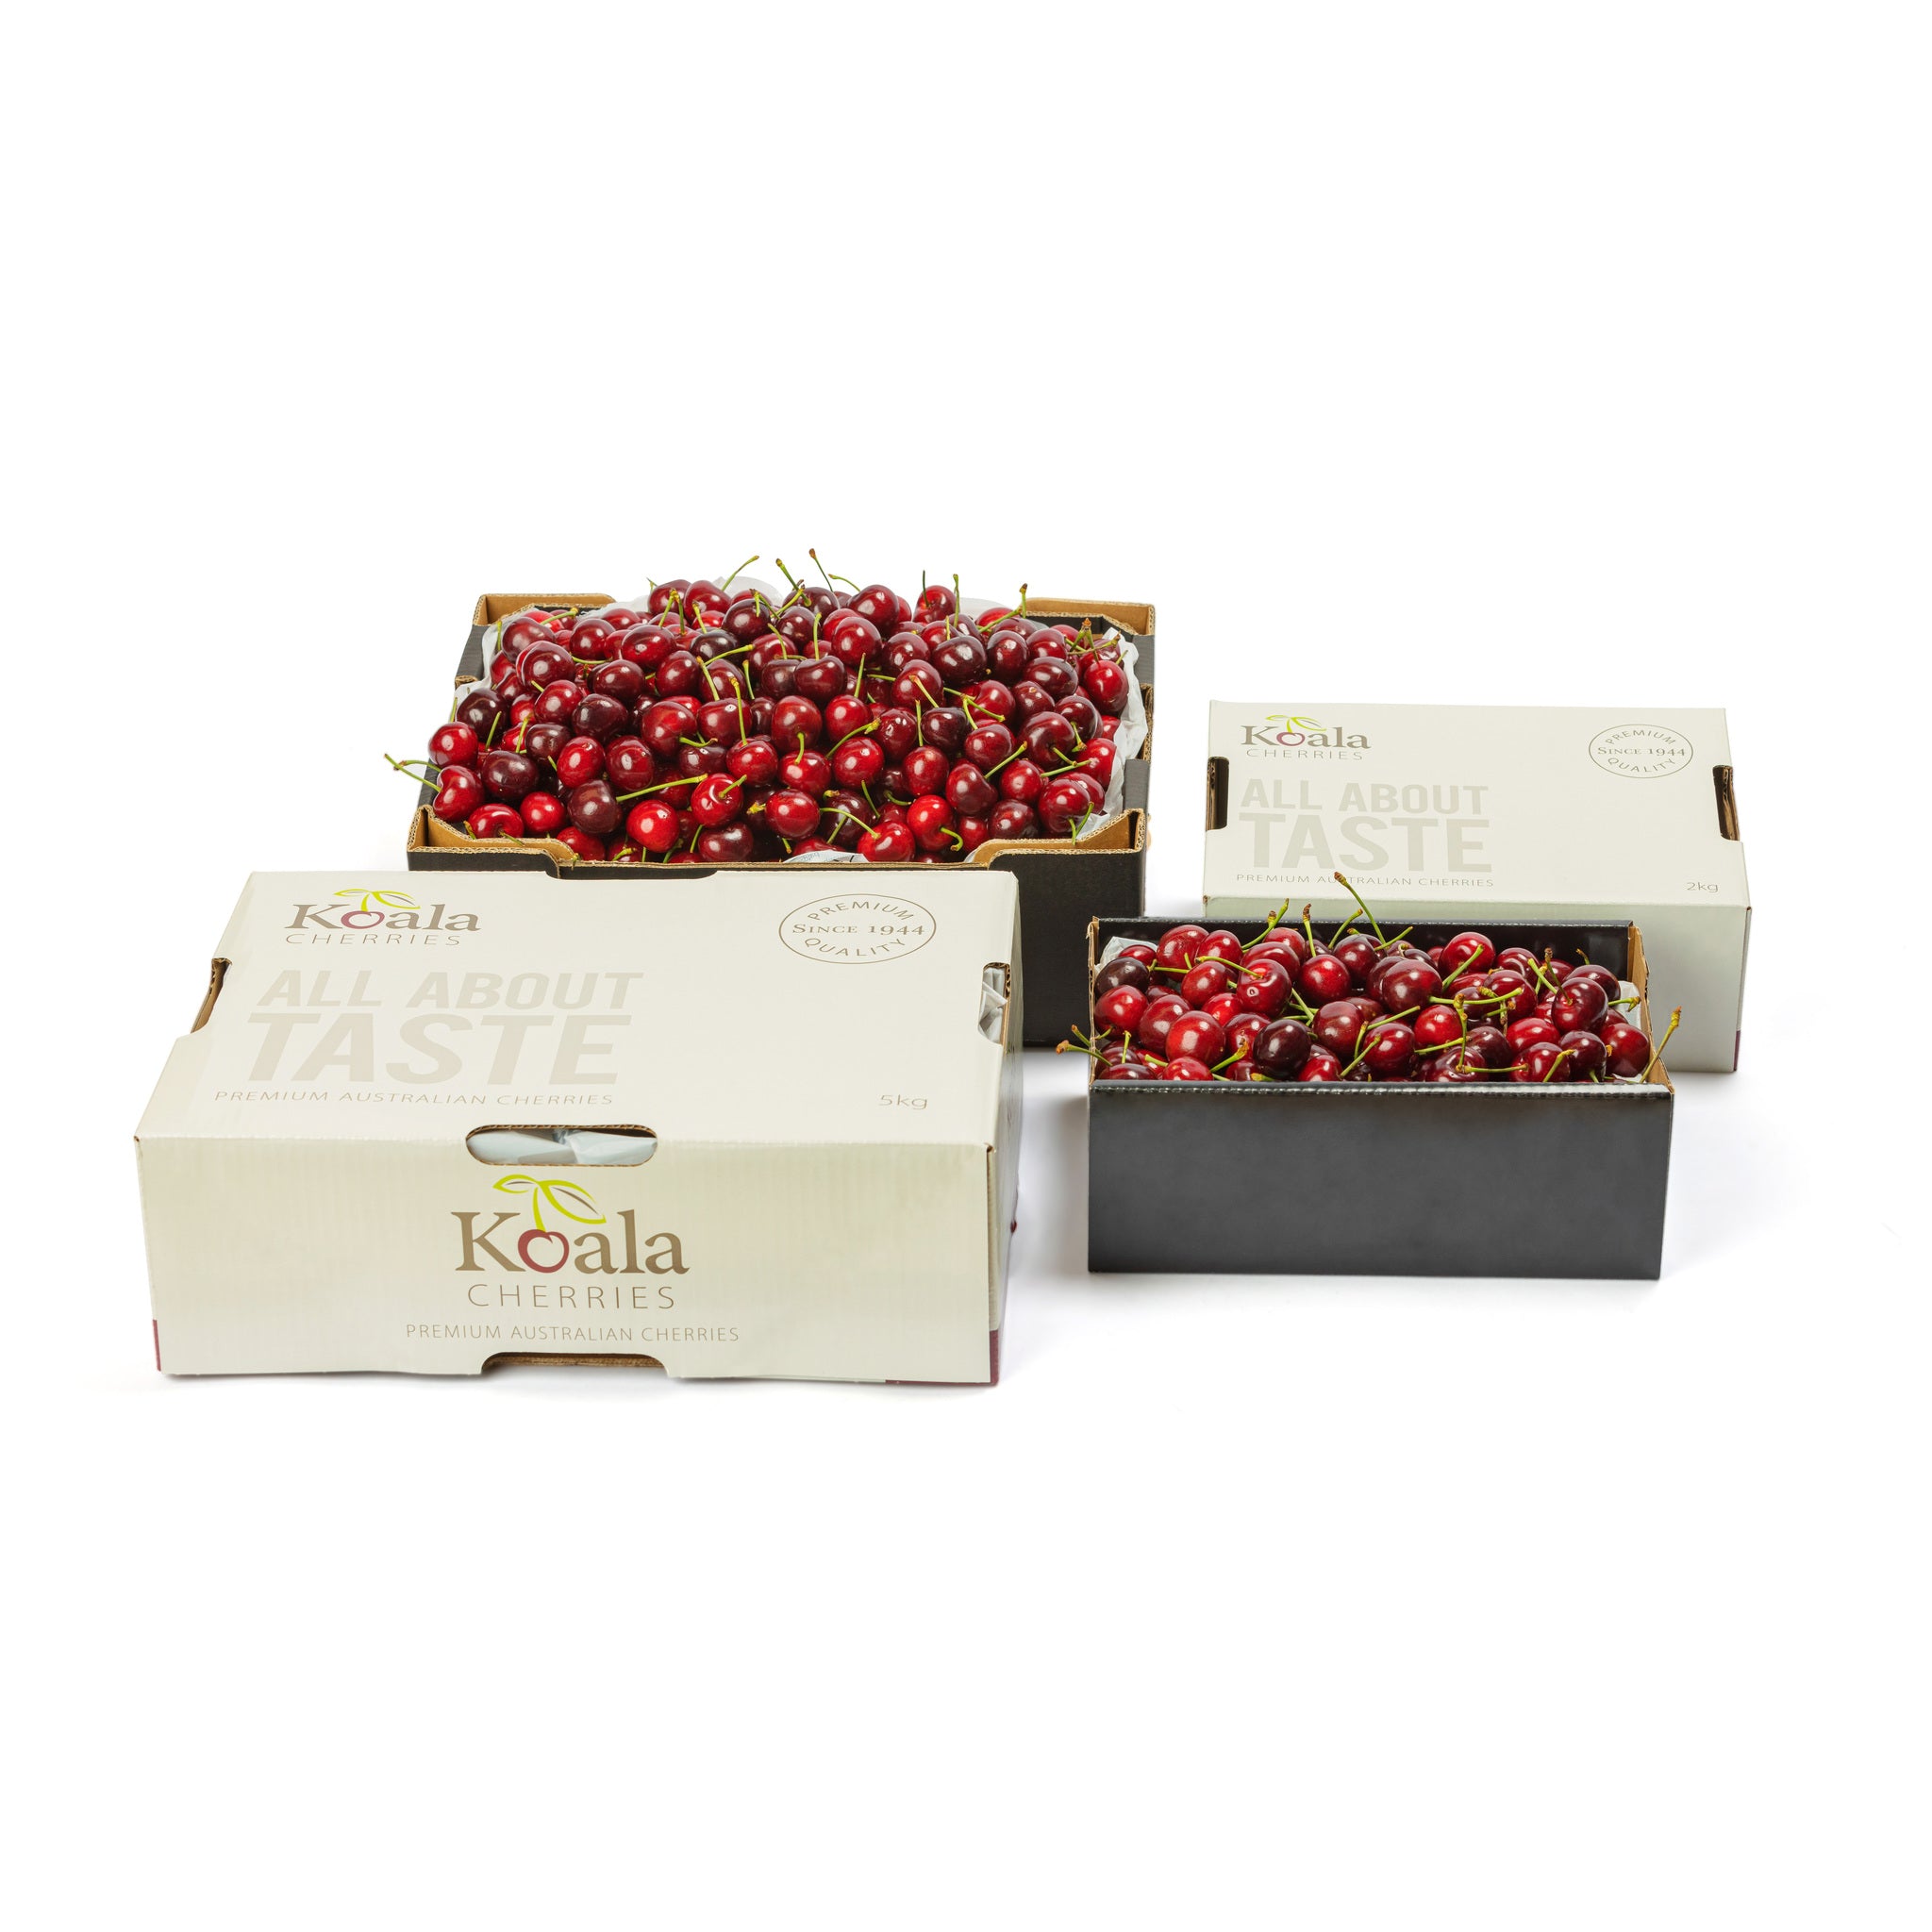 2kg and 5kg box of cherries with the lid off dark red big cherries from koala cherries